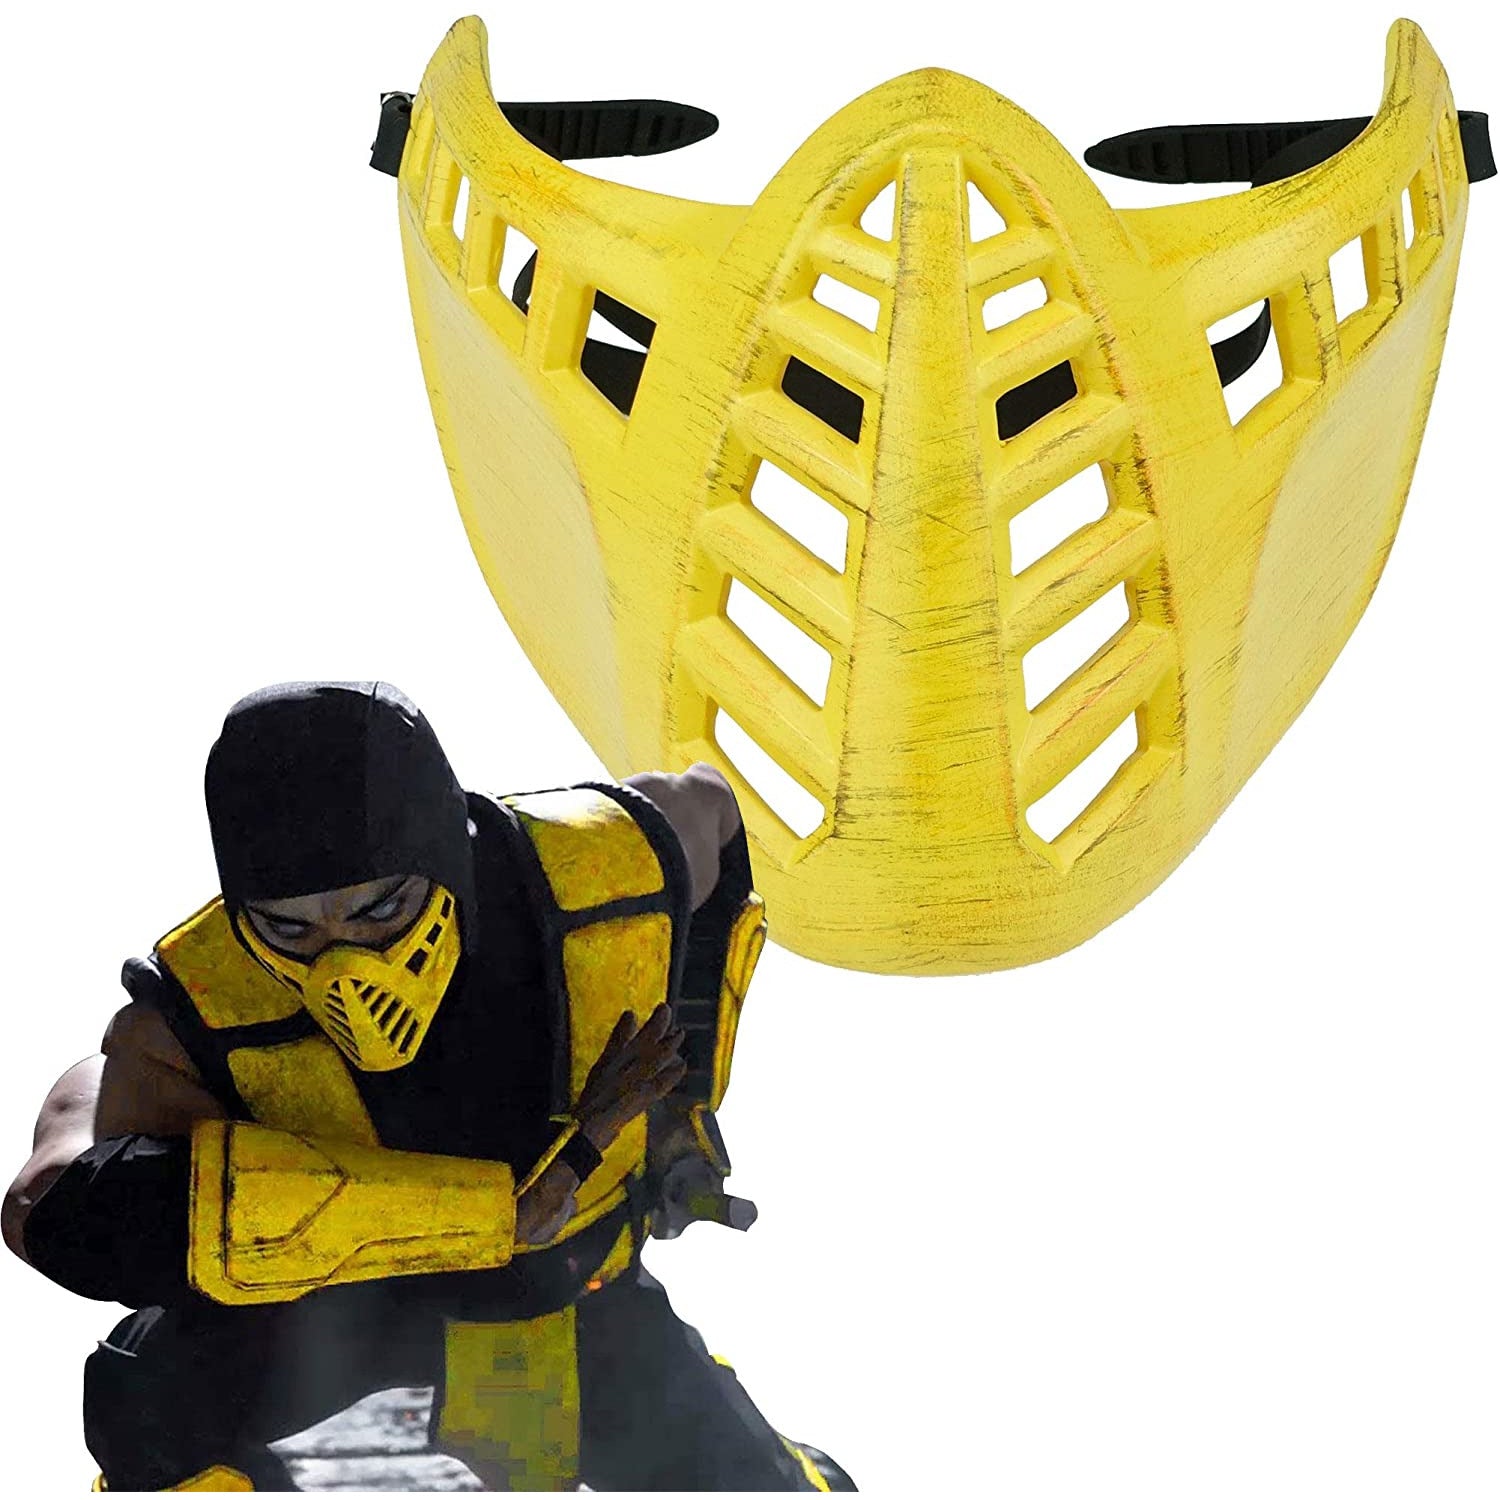 Mortal Kombat Game Mask, Jade/Sub-Zero/Kabal/Saibot/Scorpion/Smoke Resin Mask For Halloween Costume Accessory